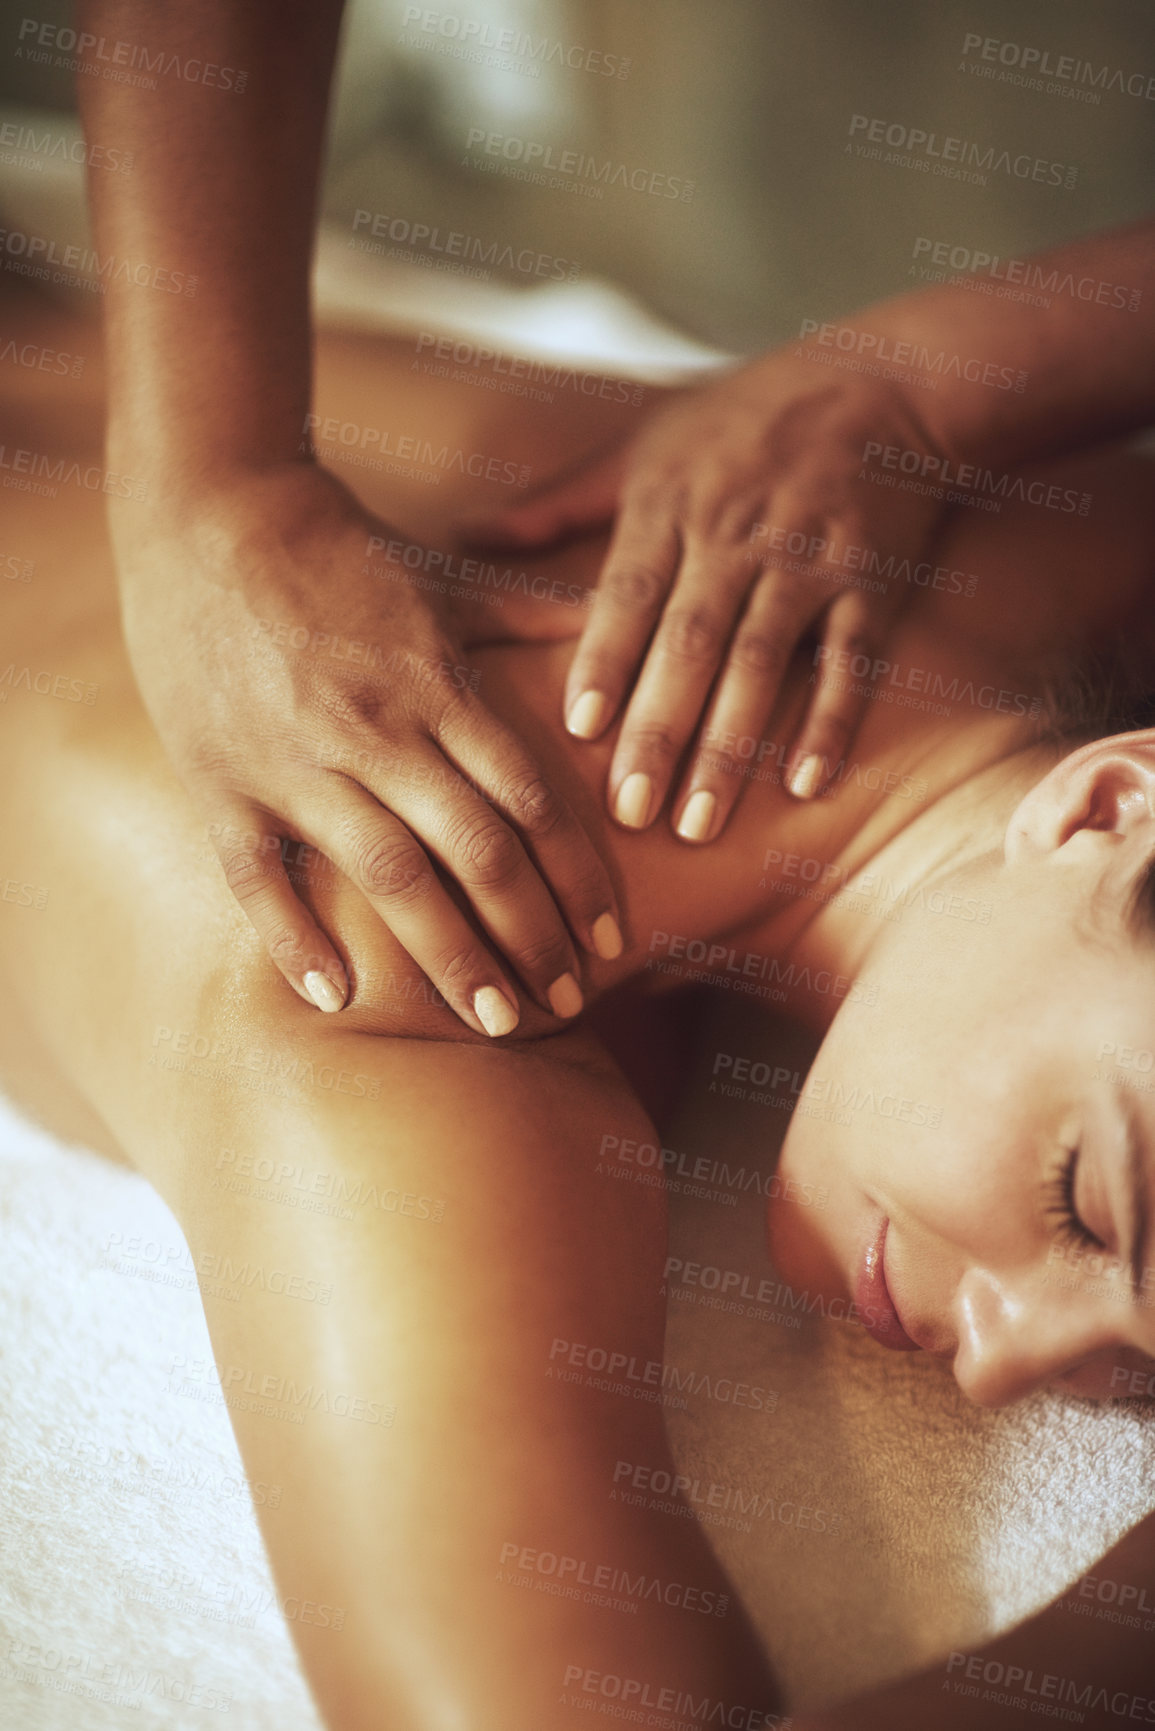 Buy stock photo Shot of a young woman enjoying a back massage